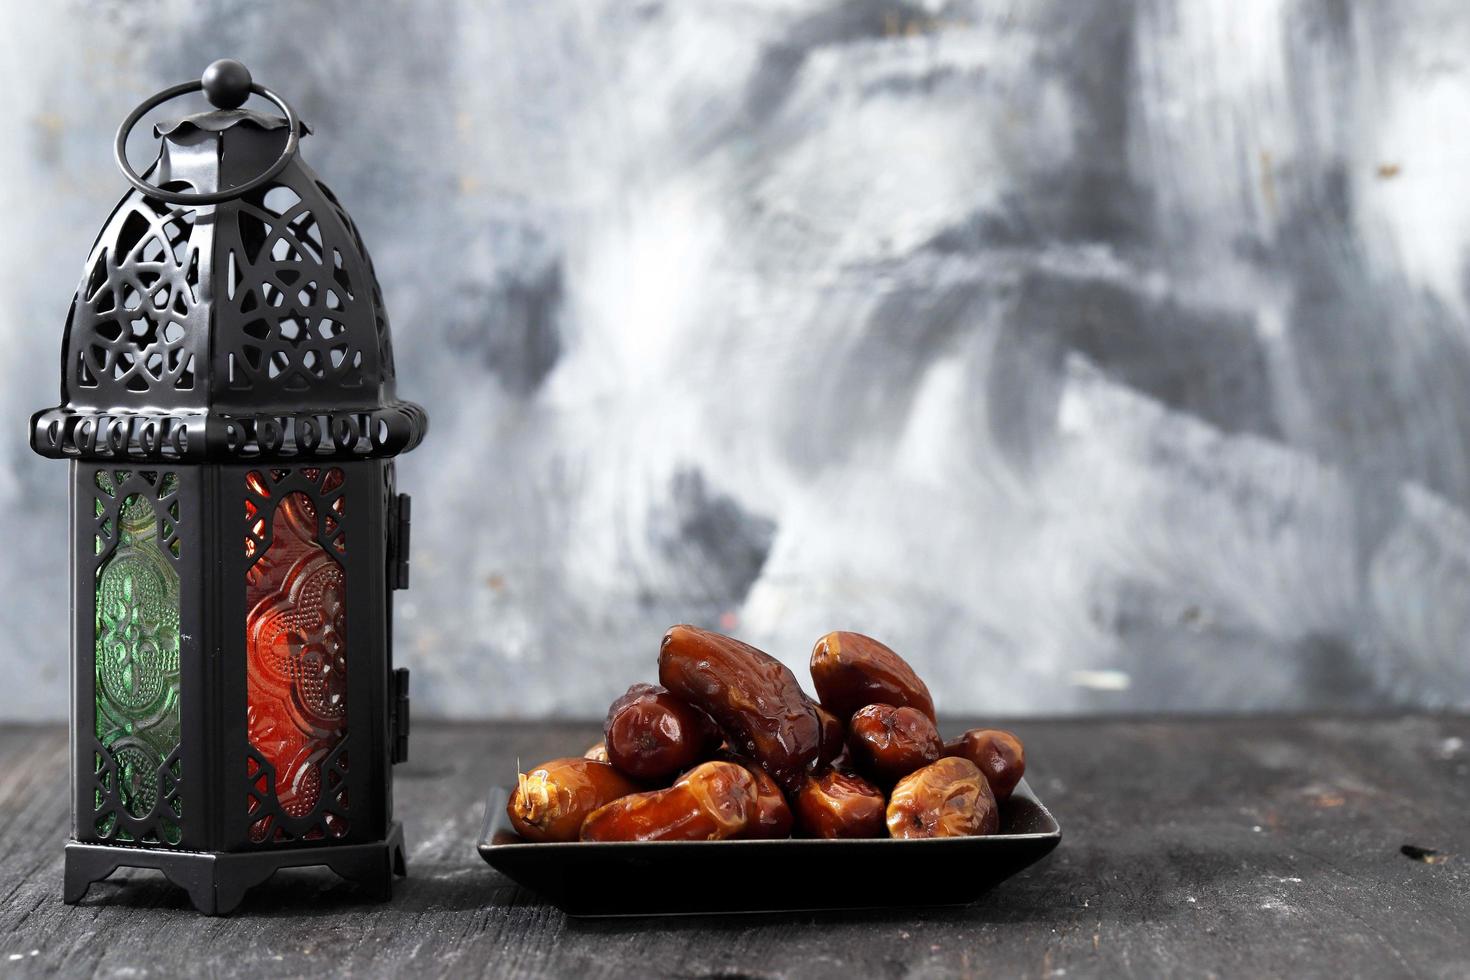 Ramadan Kareem with Premium Dates and Arabic Lantern, Copy Space for Text. photo